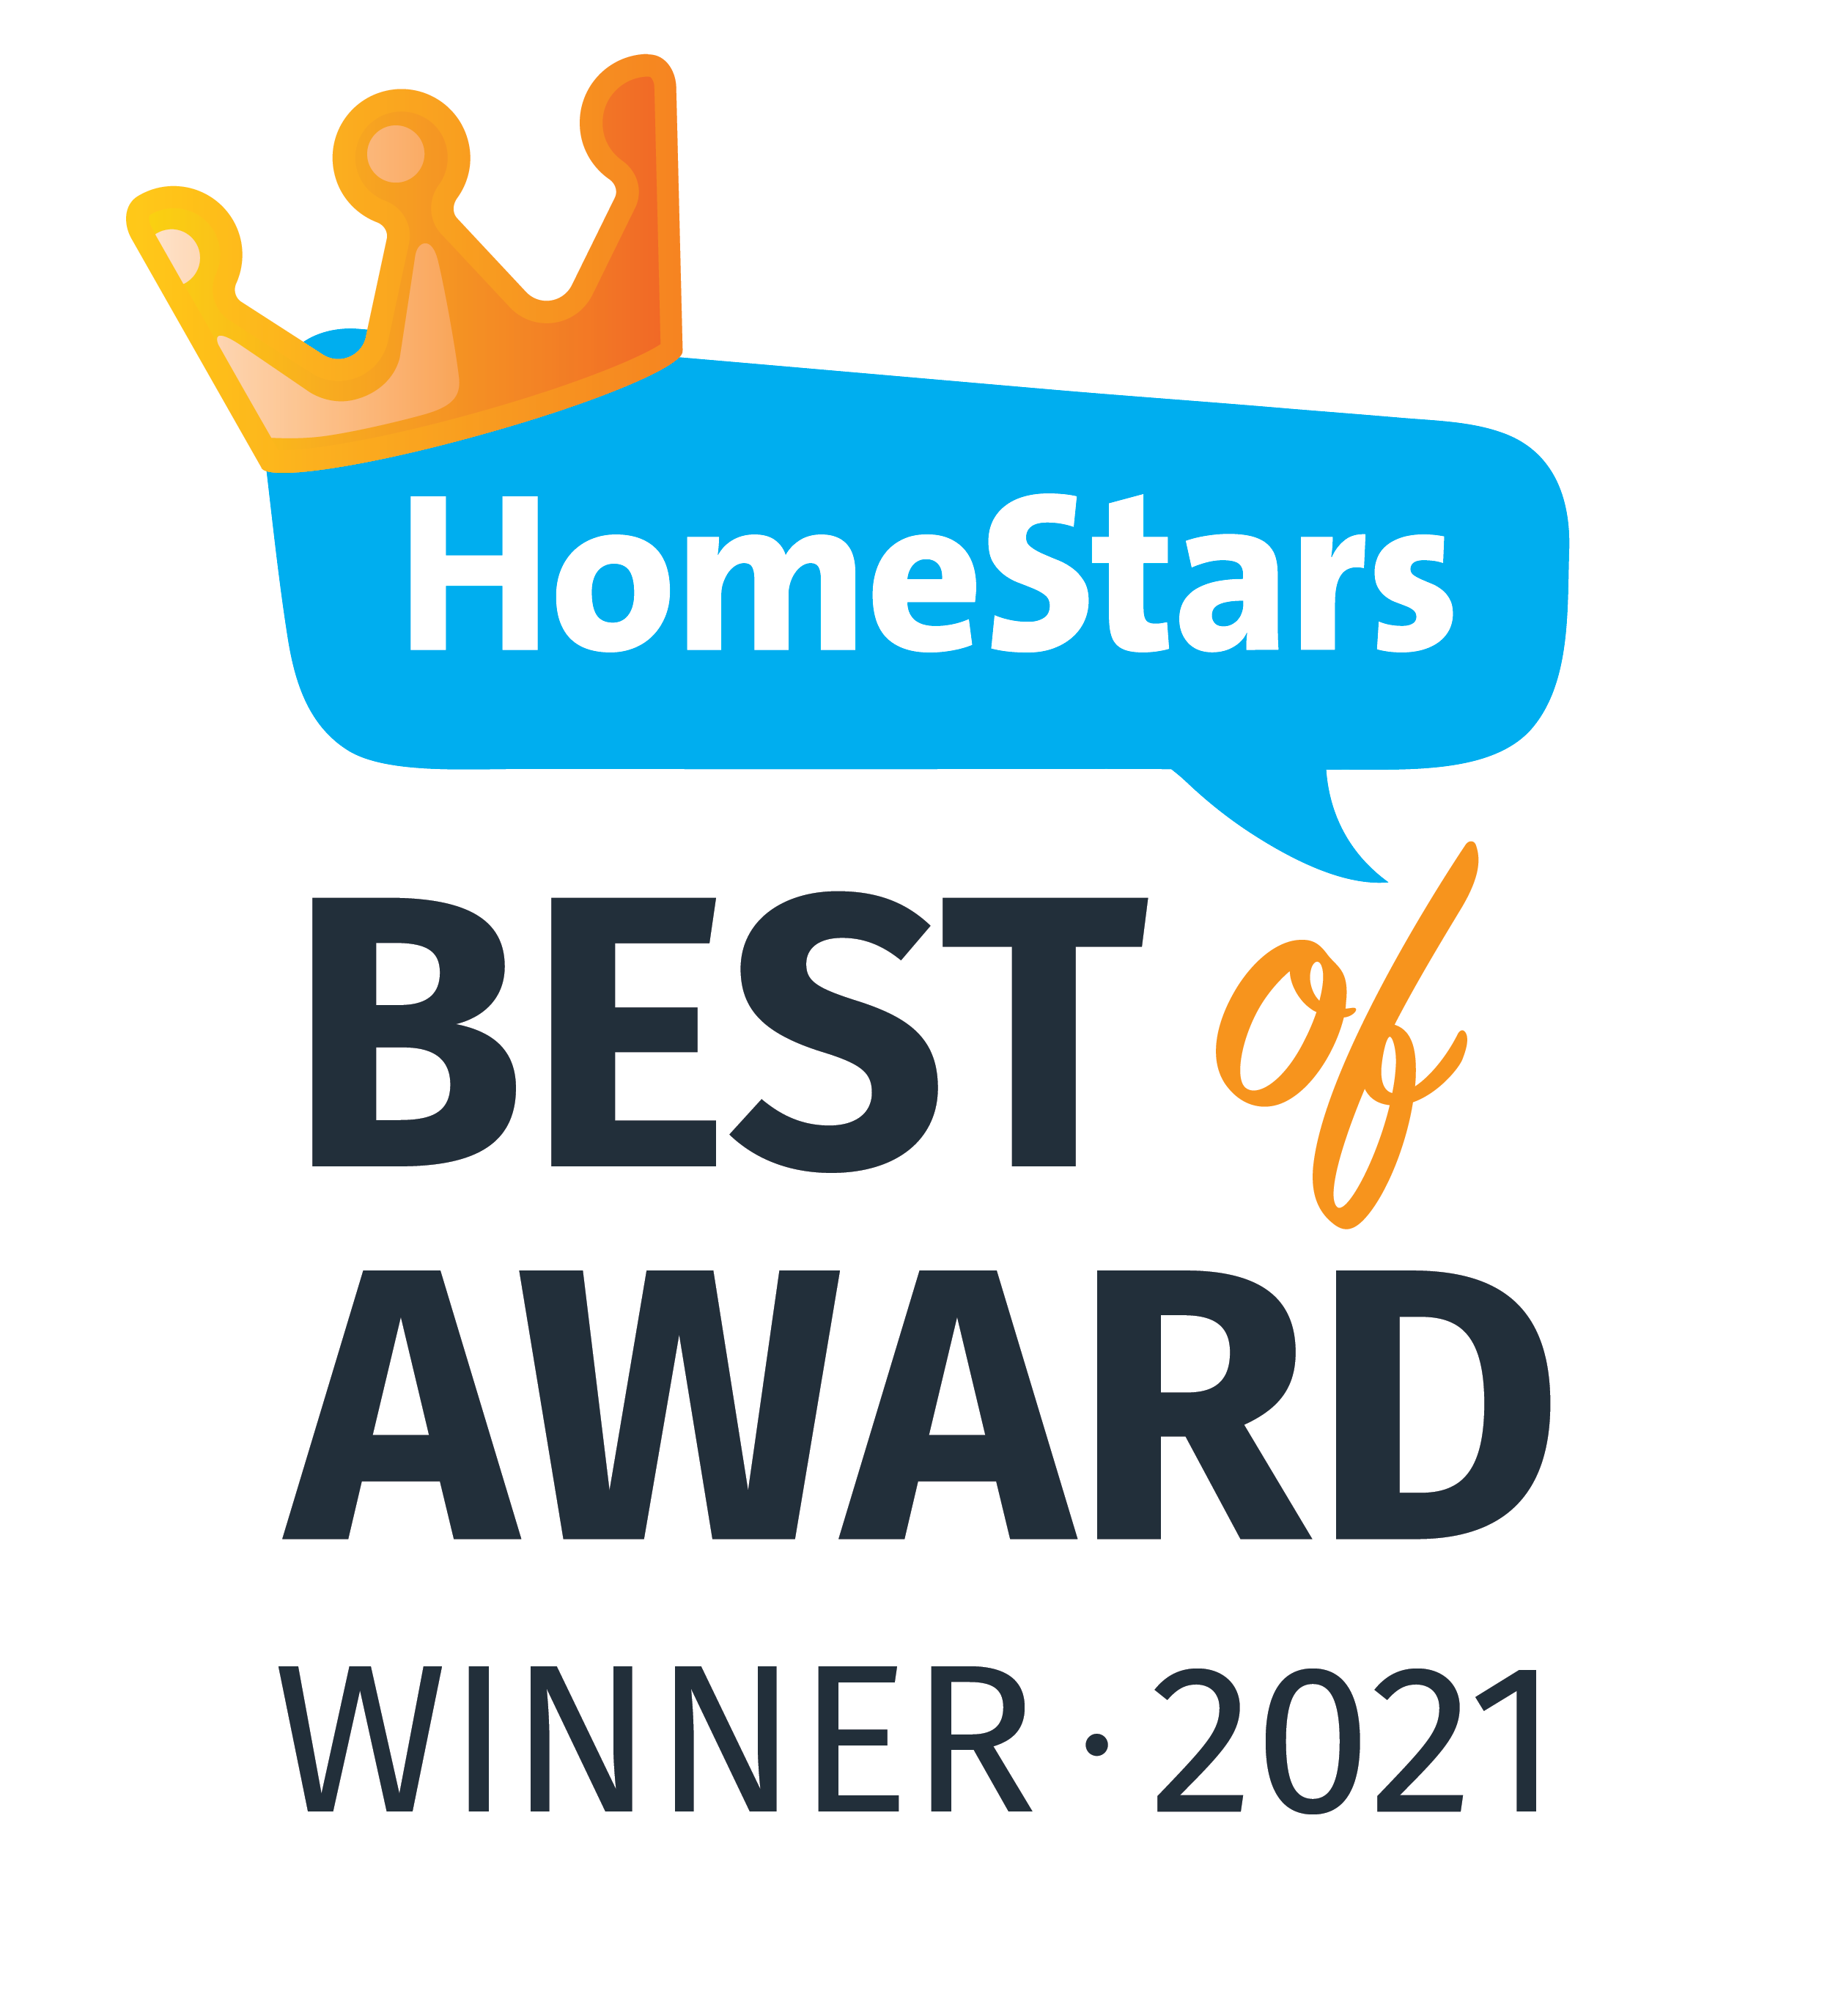 Check us on HomeStars.com!